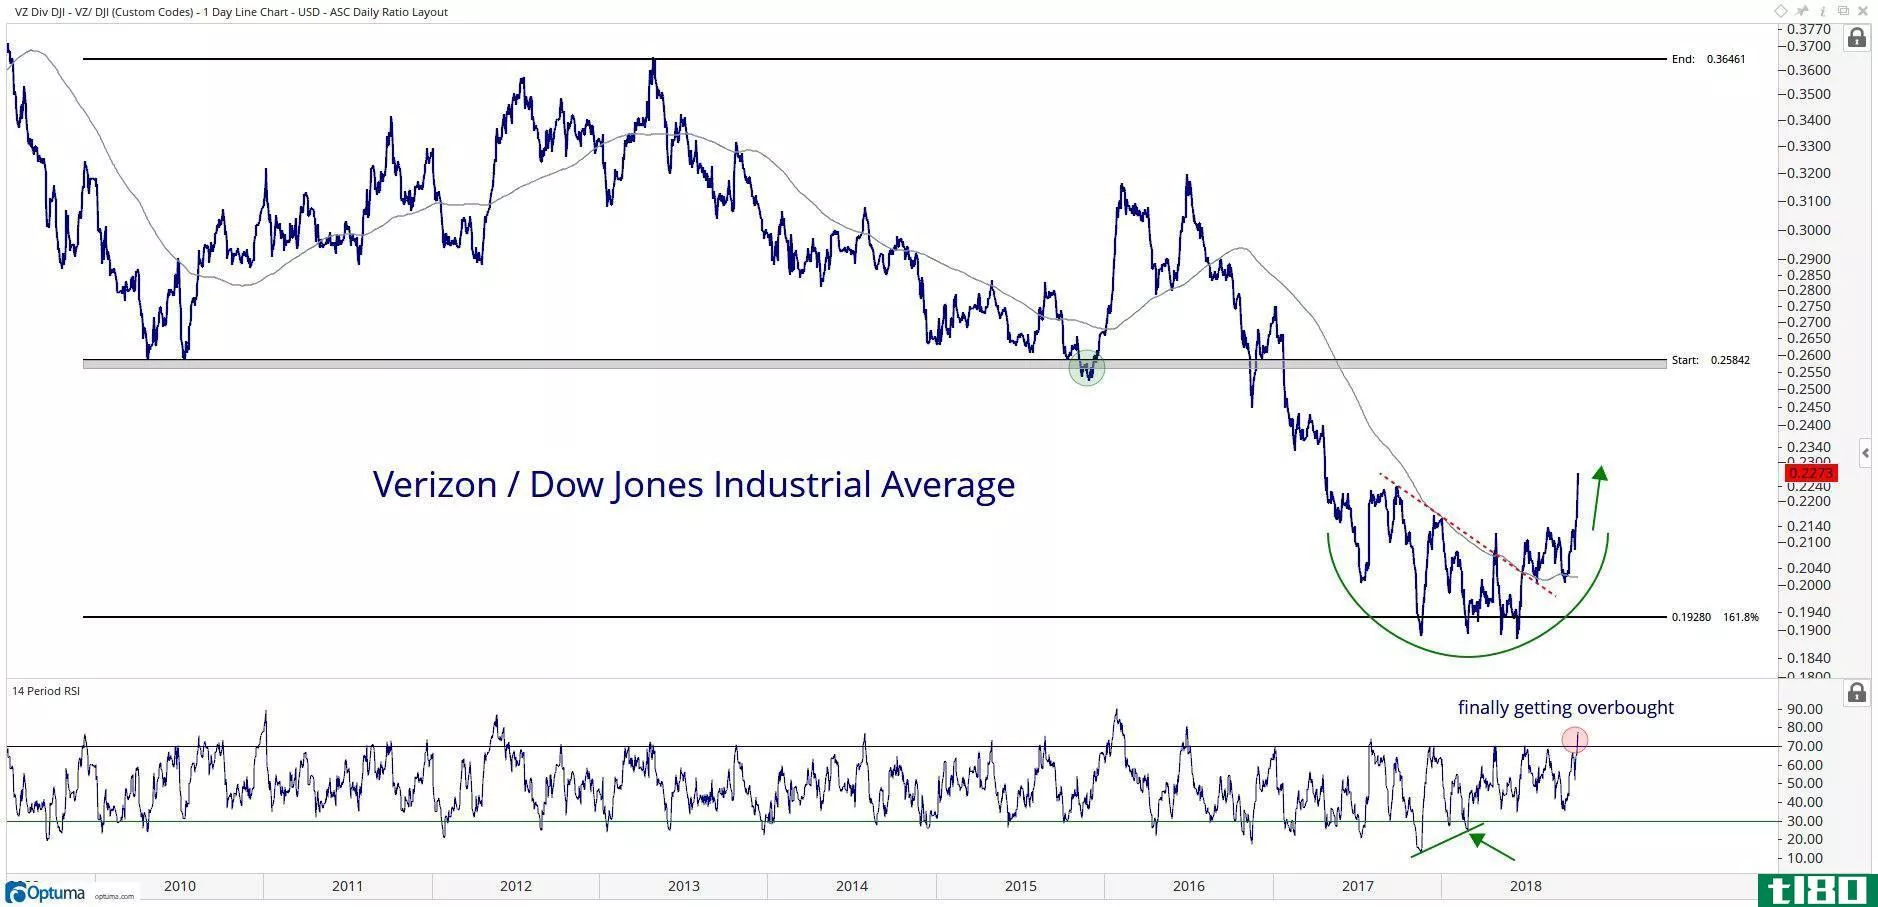 Technical chart showing the performance of Verizon Communicati*** Inc. (VZ) stock vs. the Dow Jones Industrial Average